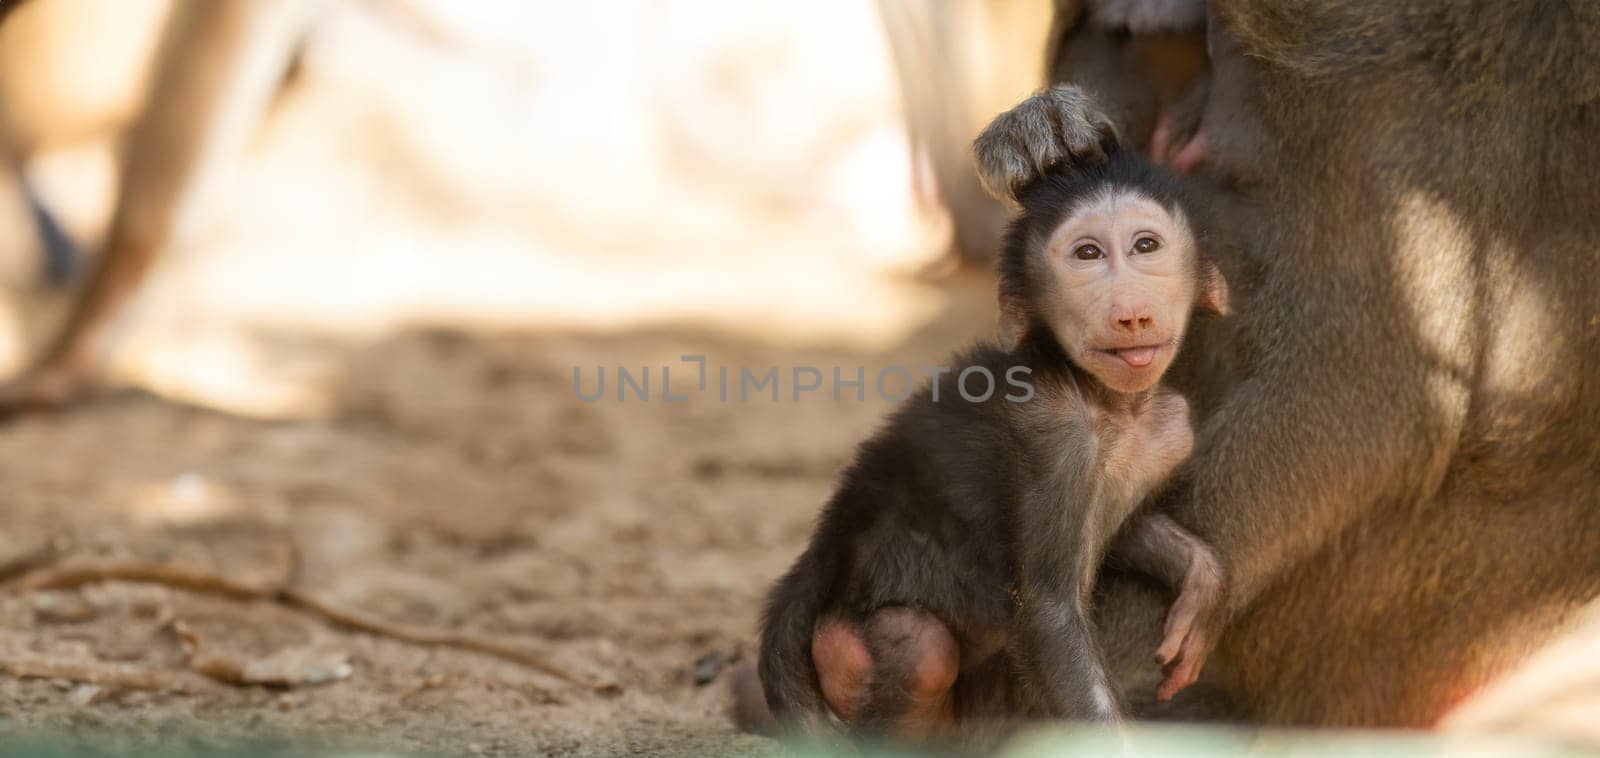 A baby monkey sitting next to an adult monkey